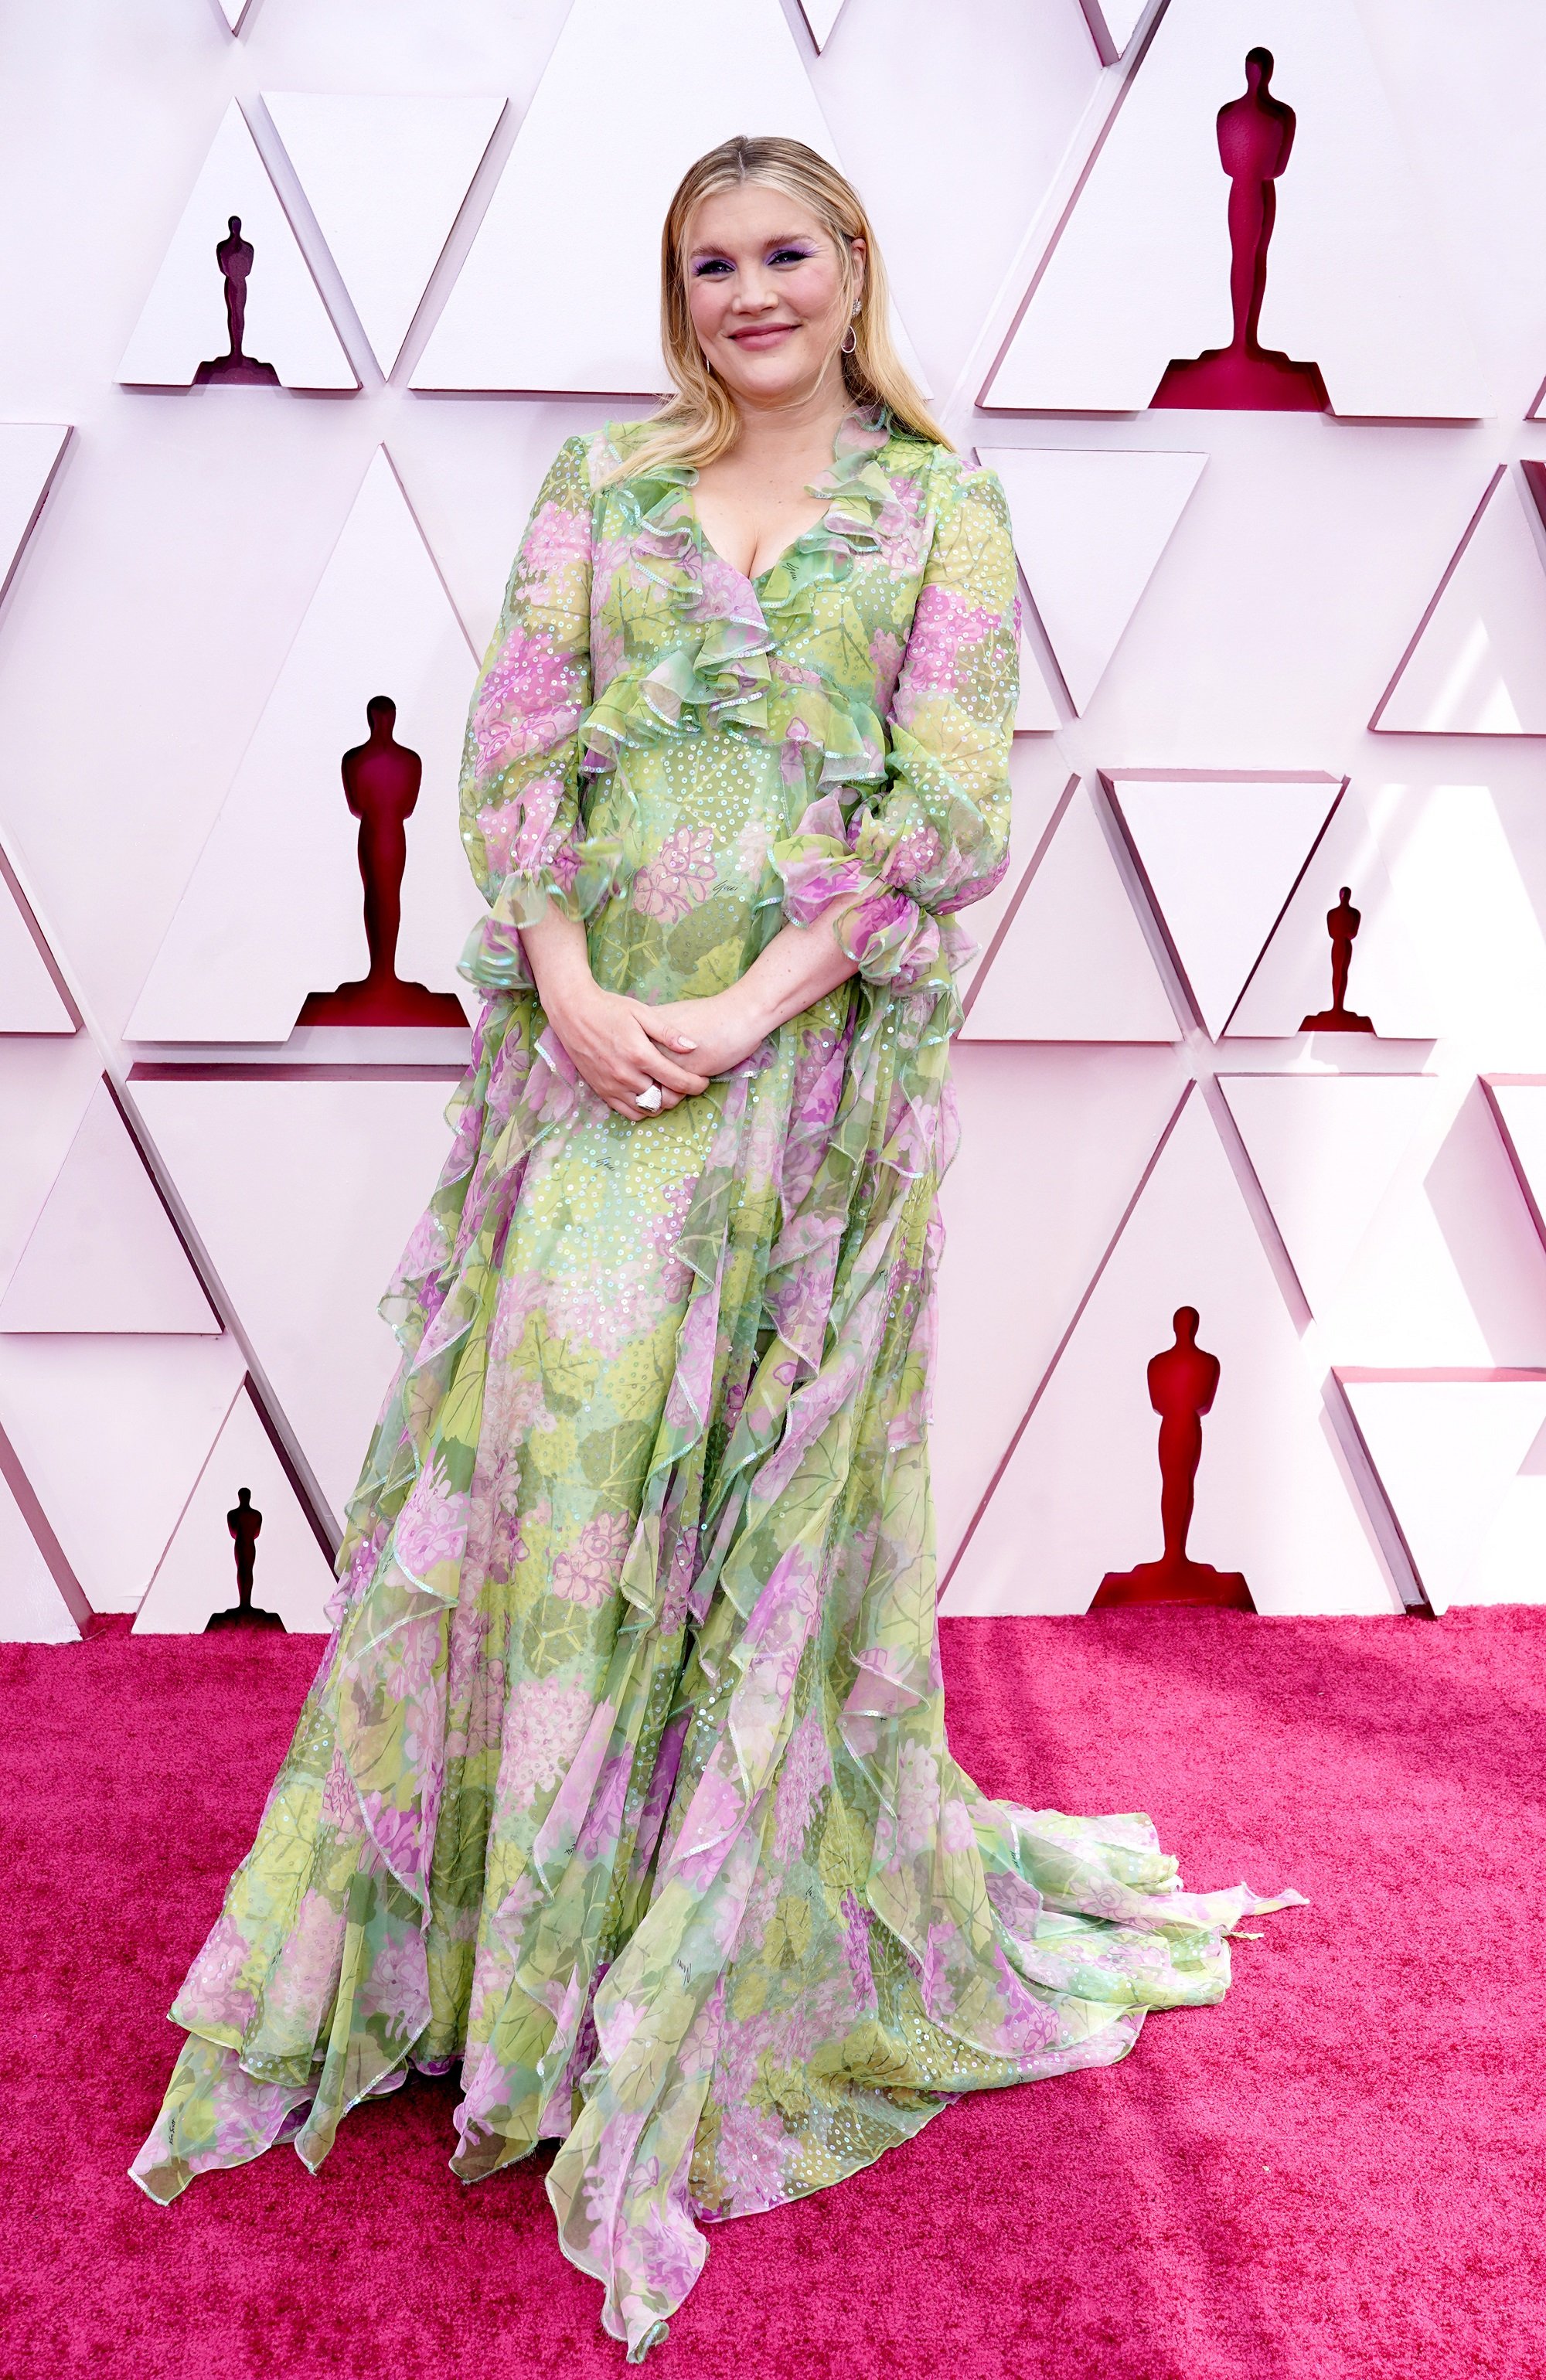 Emerald Fennell en Premios Oscar 2021 en Los Ángeles. | Foto: Getty Images